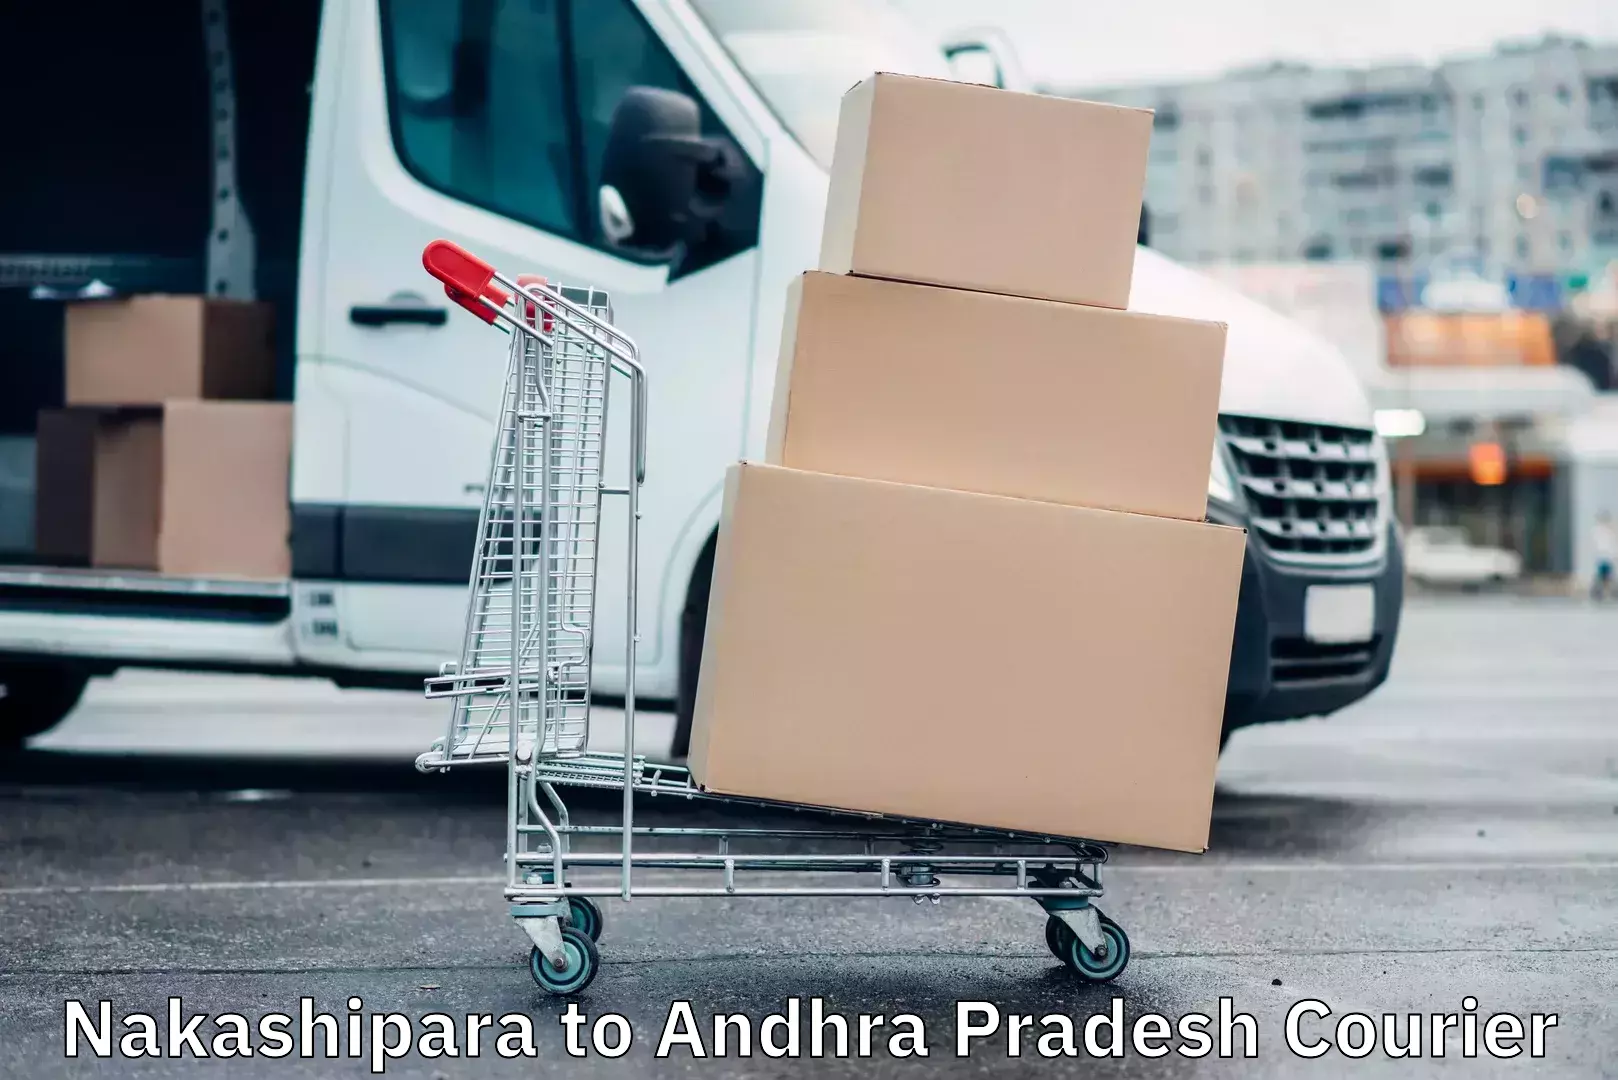 Efficient parcel service Nakashipara to Andhra Pradesh